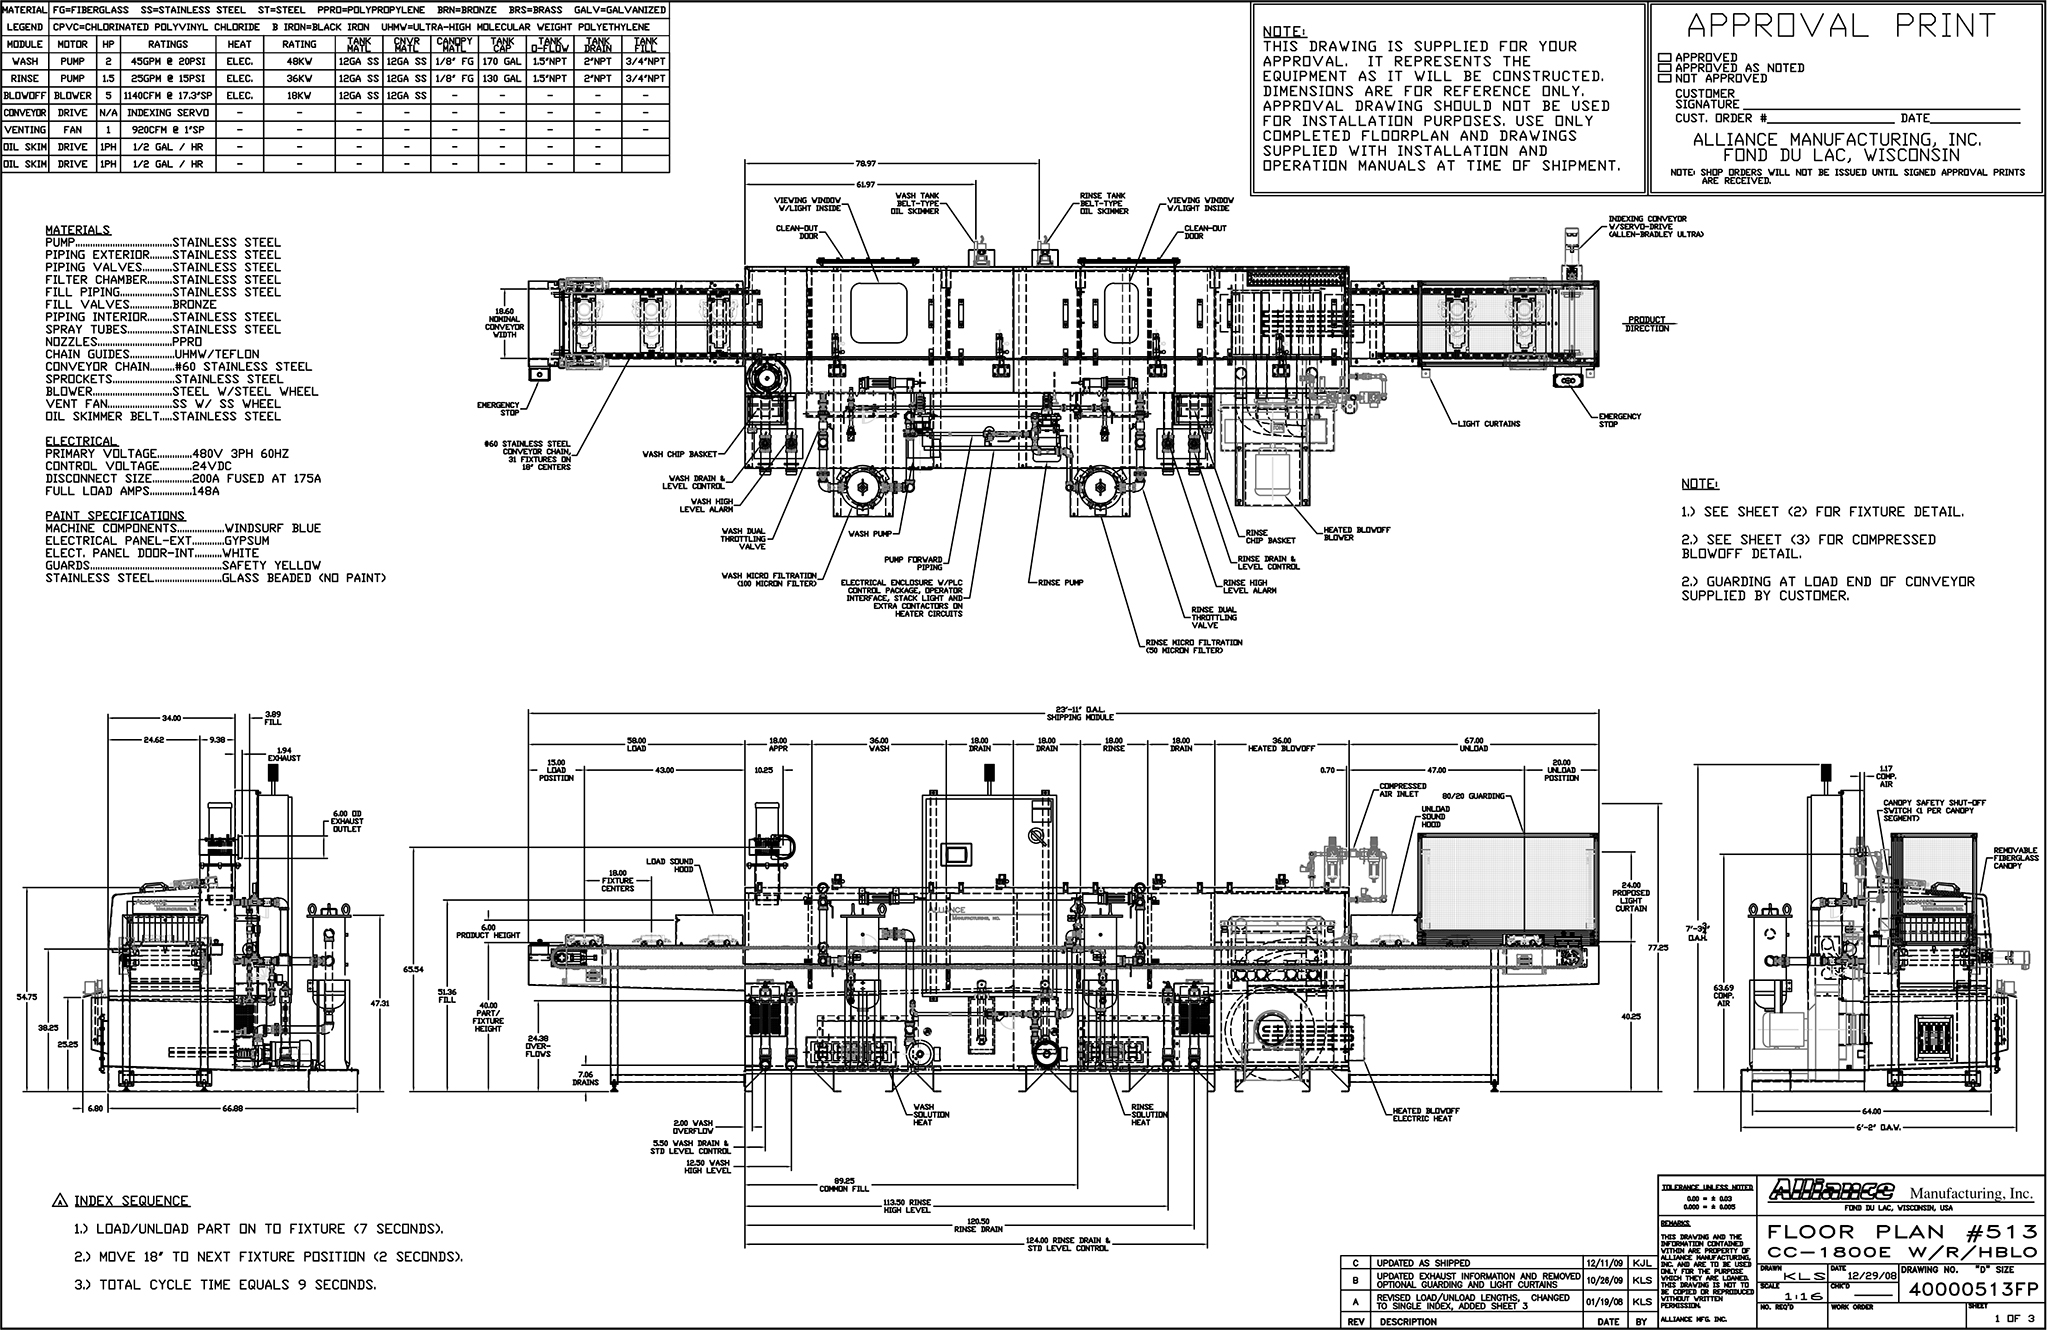 Aqyamaster CC-1800 (Machine #513) Blueprint